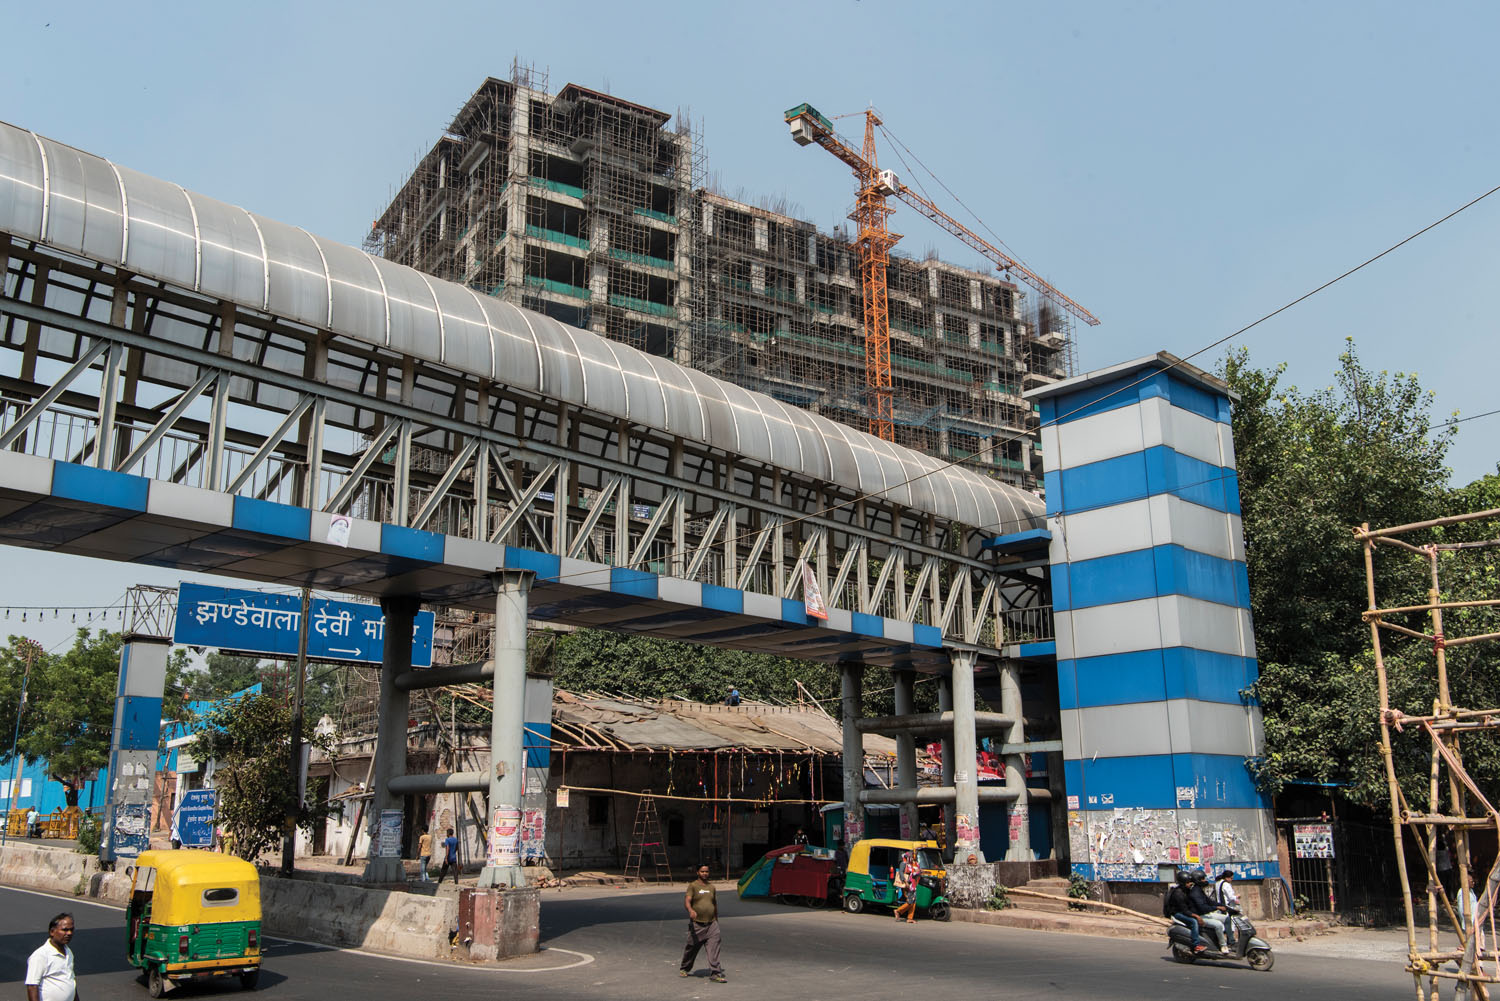 The new Rashtriya Swayamsevak Sangh (RSS) party headquarters in New Delhi under construction. Photo by Saumya Khandelwal.